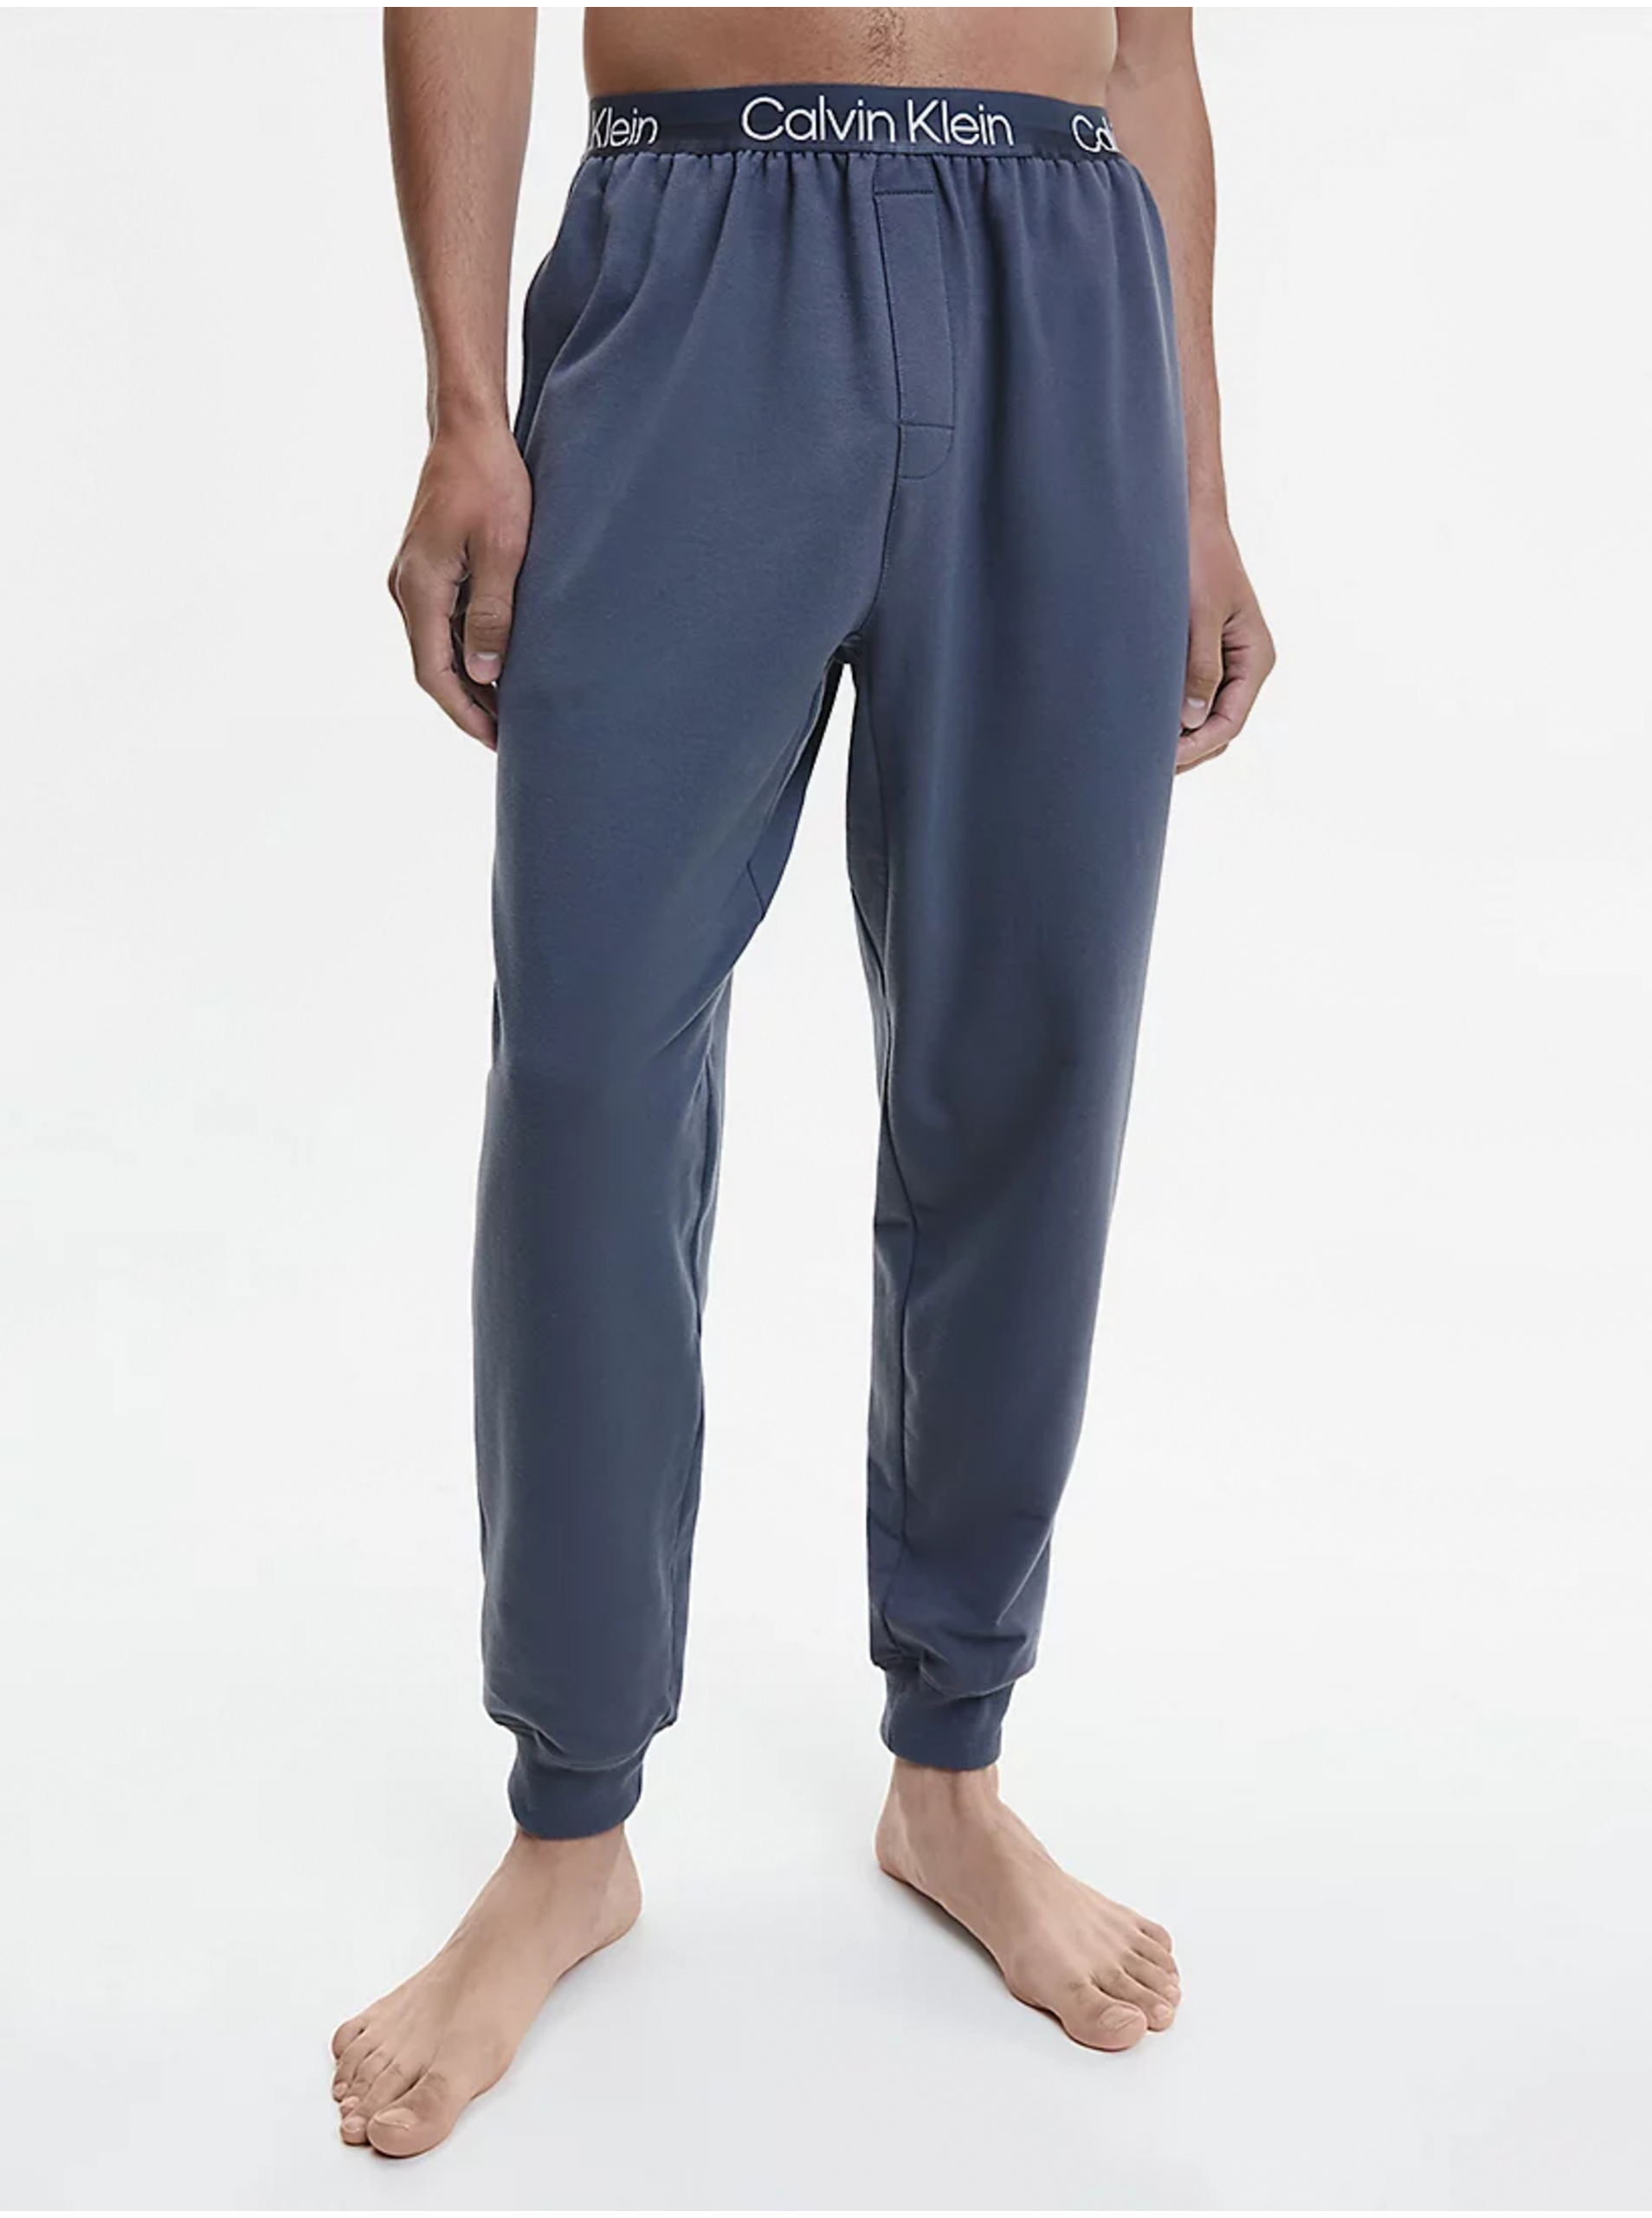 Calvin Klein Underwear Men′s Sleeping Pants - Men - modrá